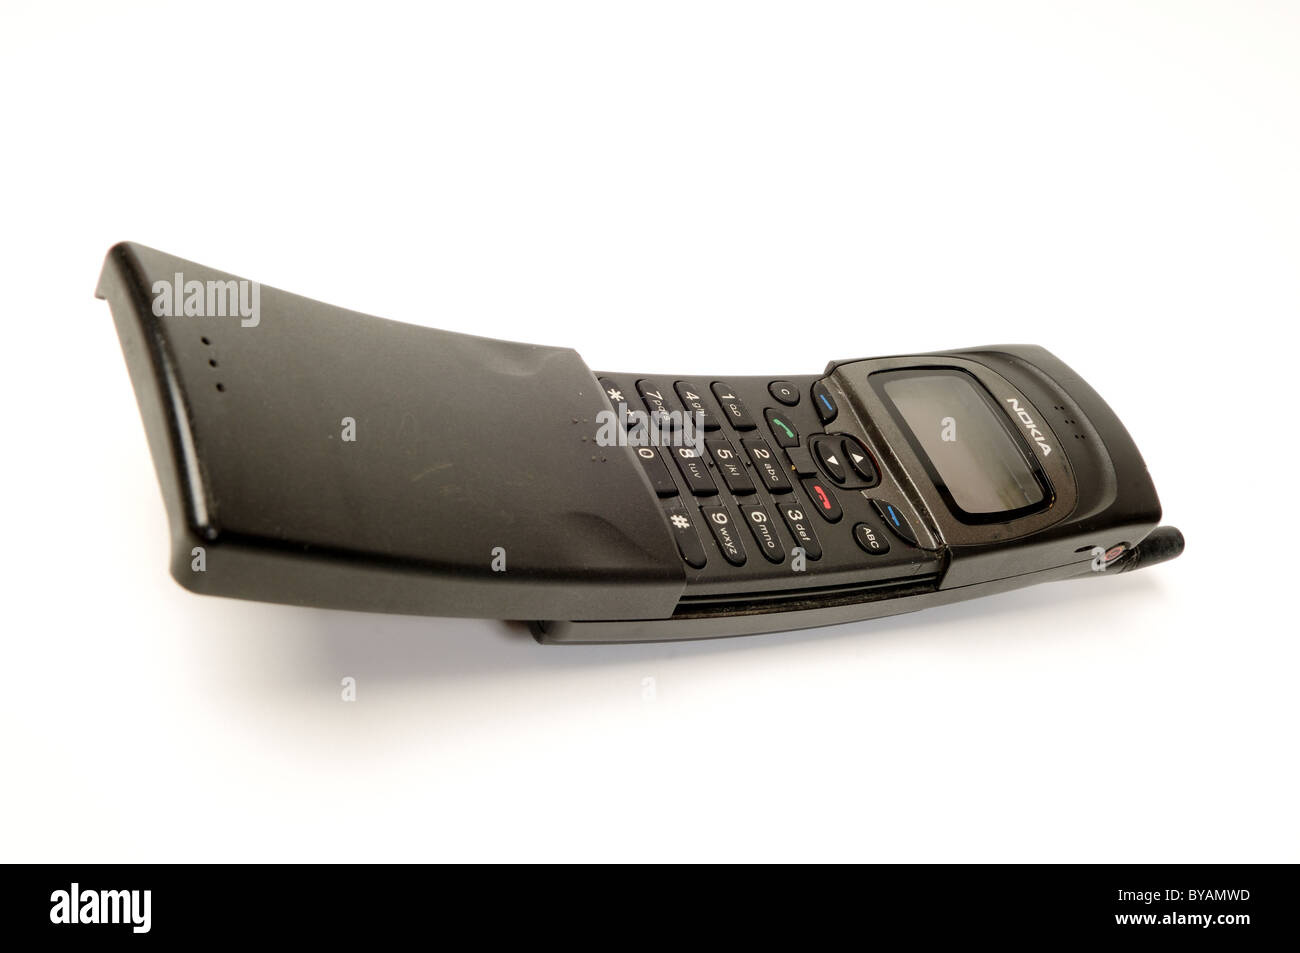 Nokia 8110 ''Banana phone'' Stock Photo - Alamy